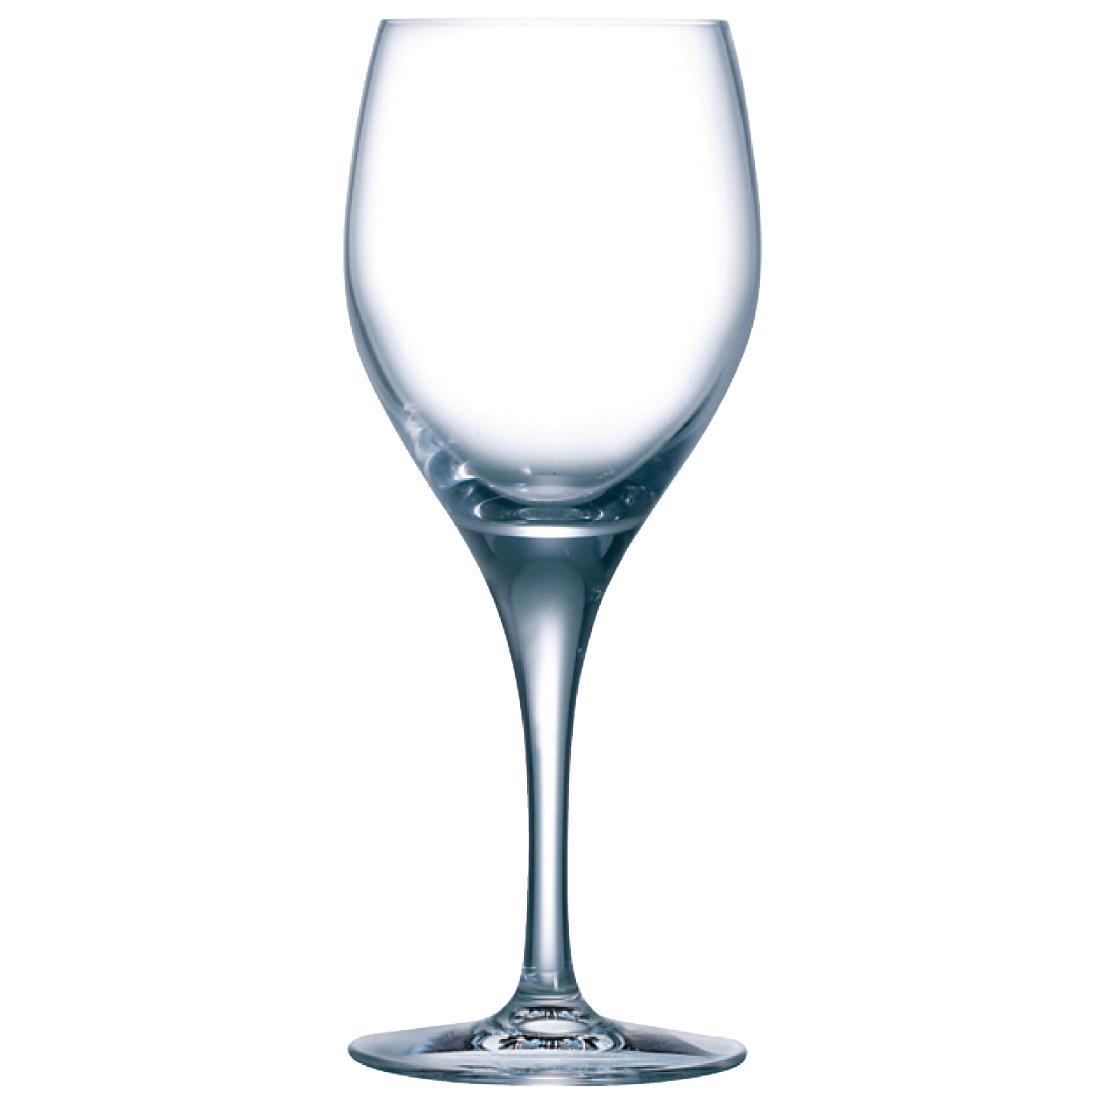 Chef & Sommelier Sensation Exalt Wine Glasses 310ml CE Marked at 250ml (Pack of 24) - DL192  - 1